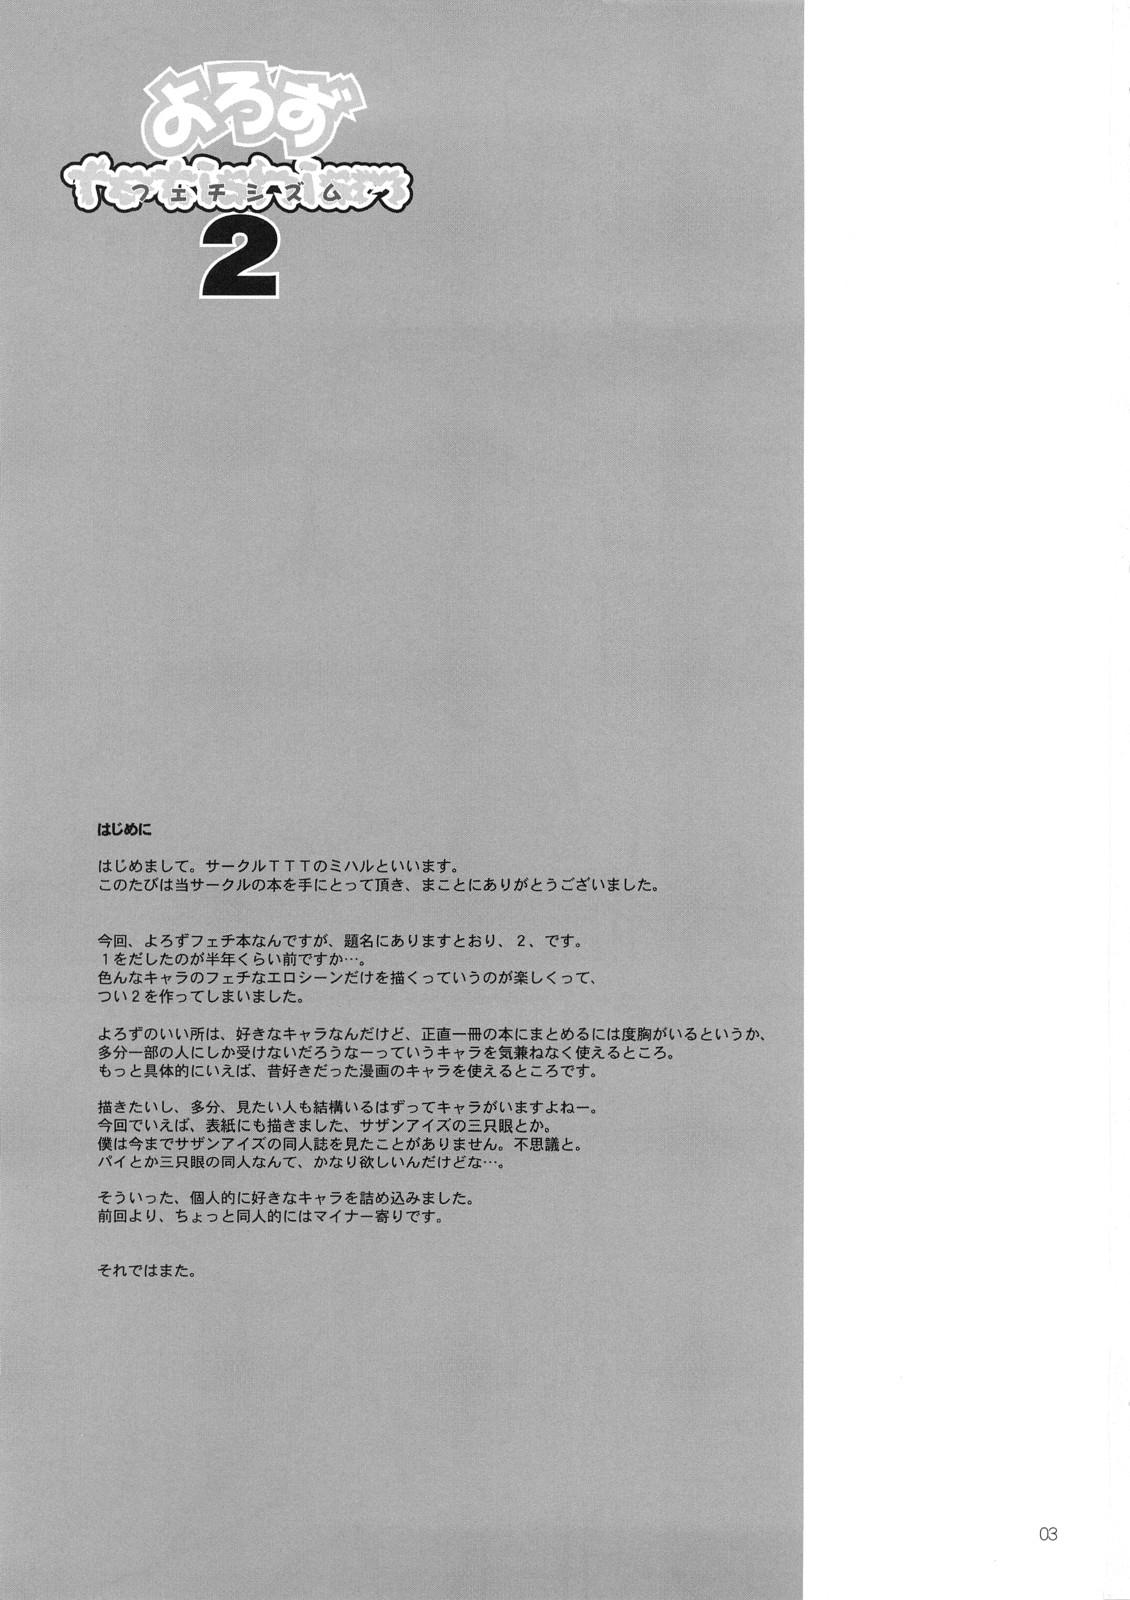 Exhib Yorozu fetishism 2 - Azumanga daioh Ghost sweeper mikami 3x3 eyes Sansha sanyou Black Dick - Page 2